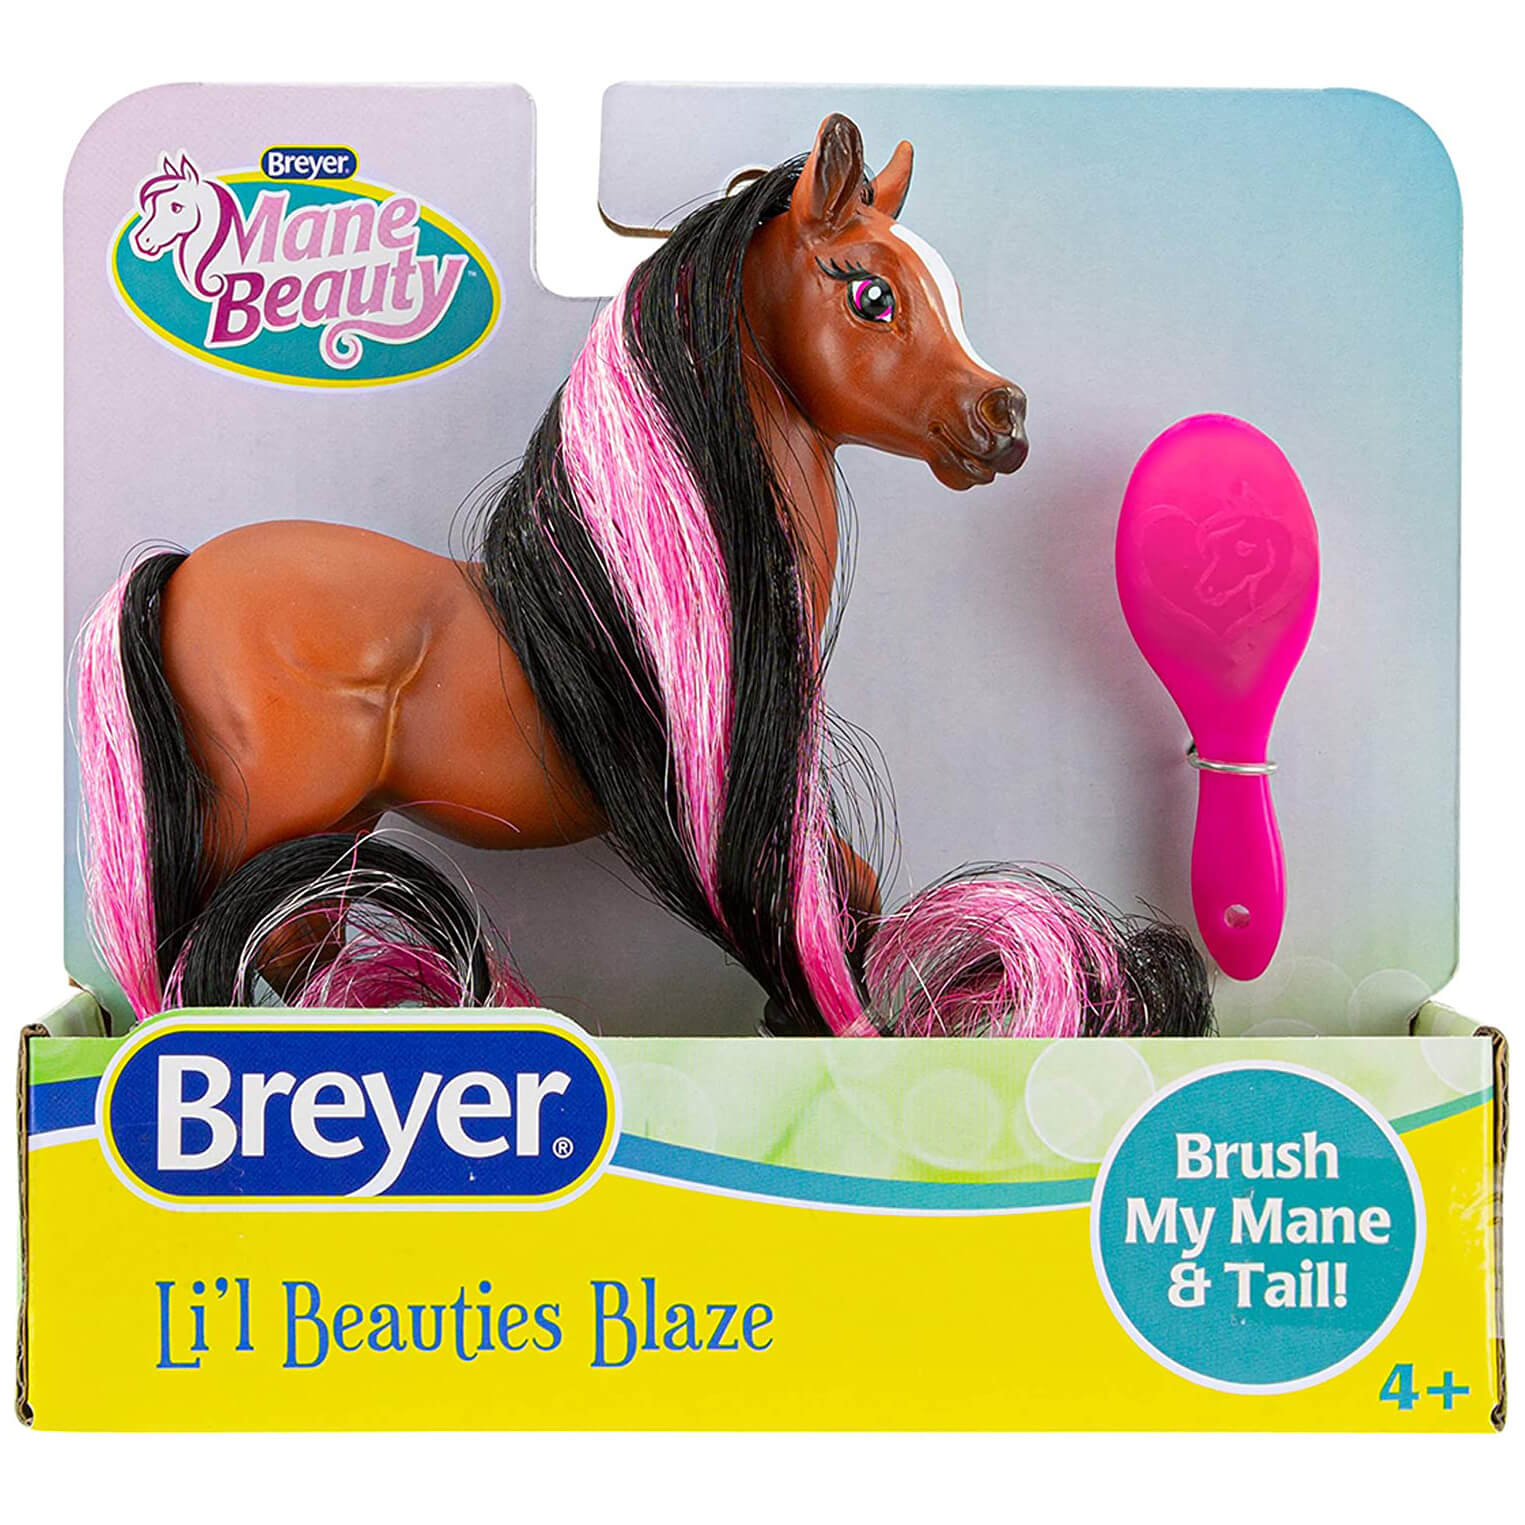 Breyer Mane Beauty Lil Beauties Blaze Horse with Brush